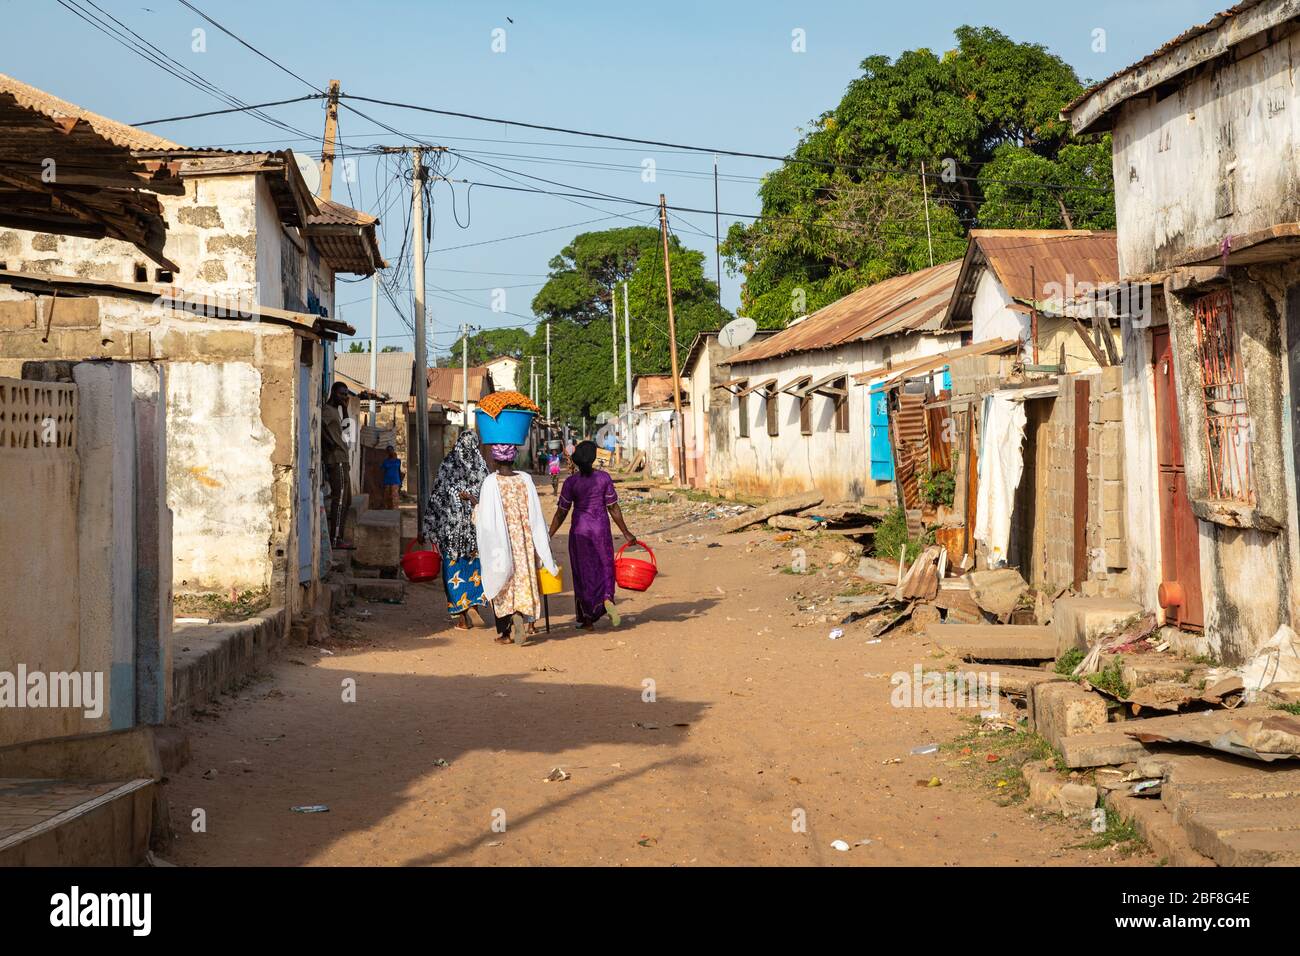 BAKAU, THE GAMBIA, NOVEMBER 18, 2019: Typical small town in Gambia. Bakau. Stock Photo